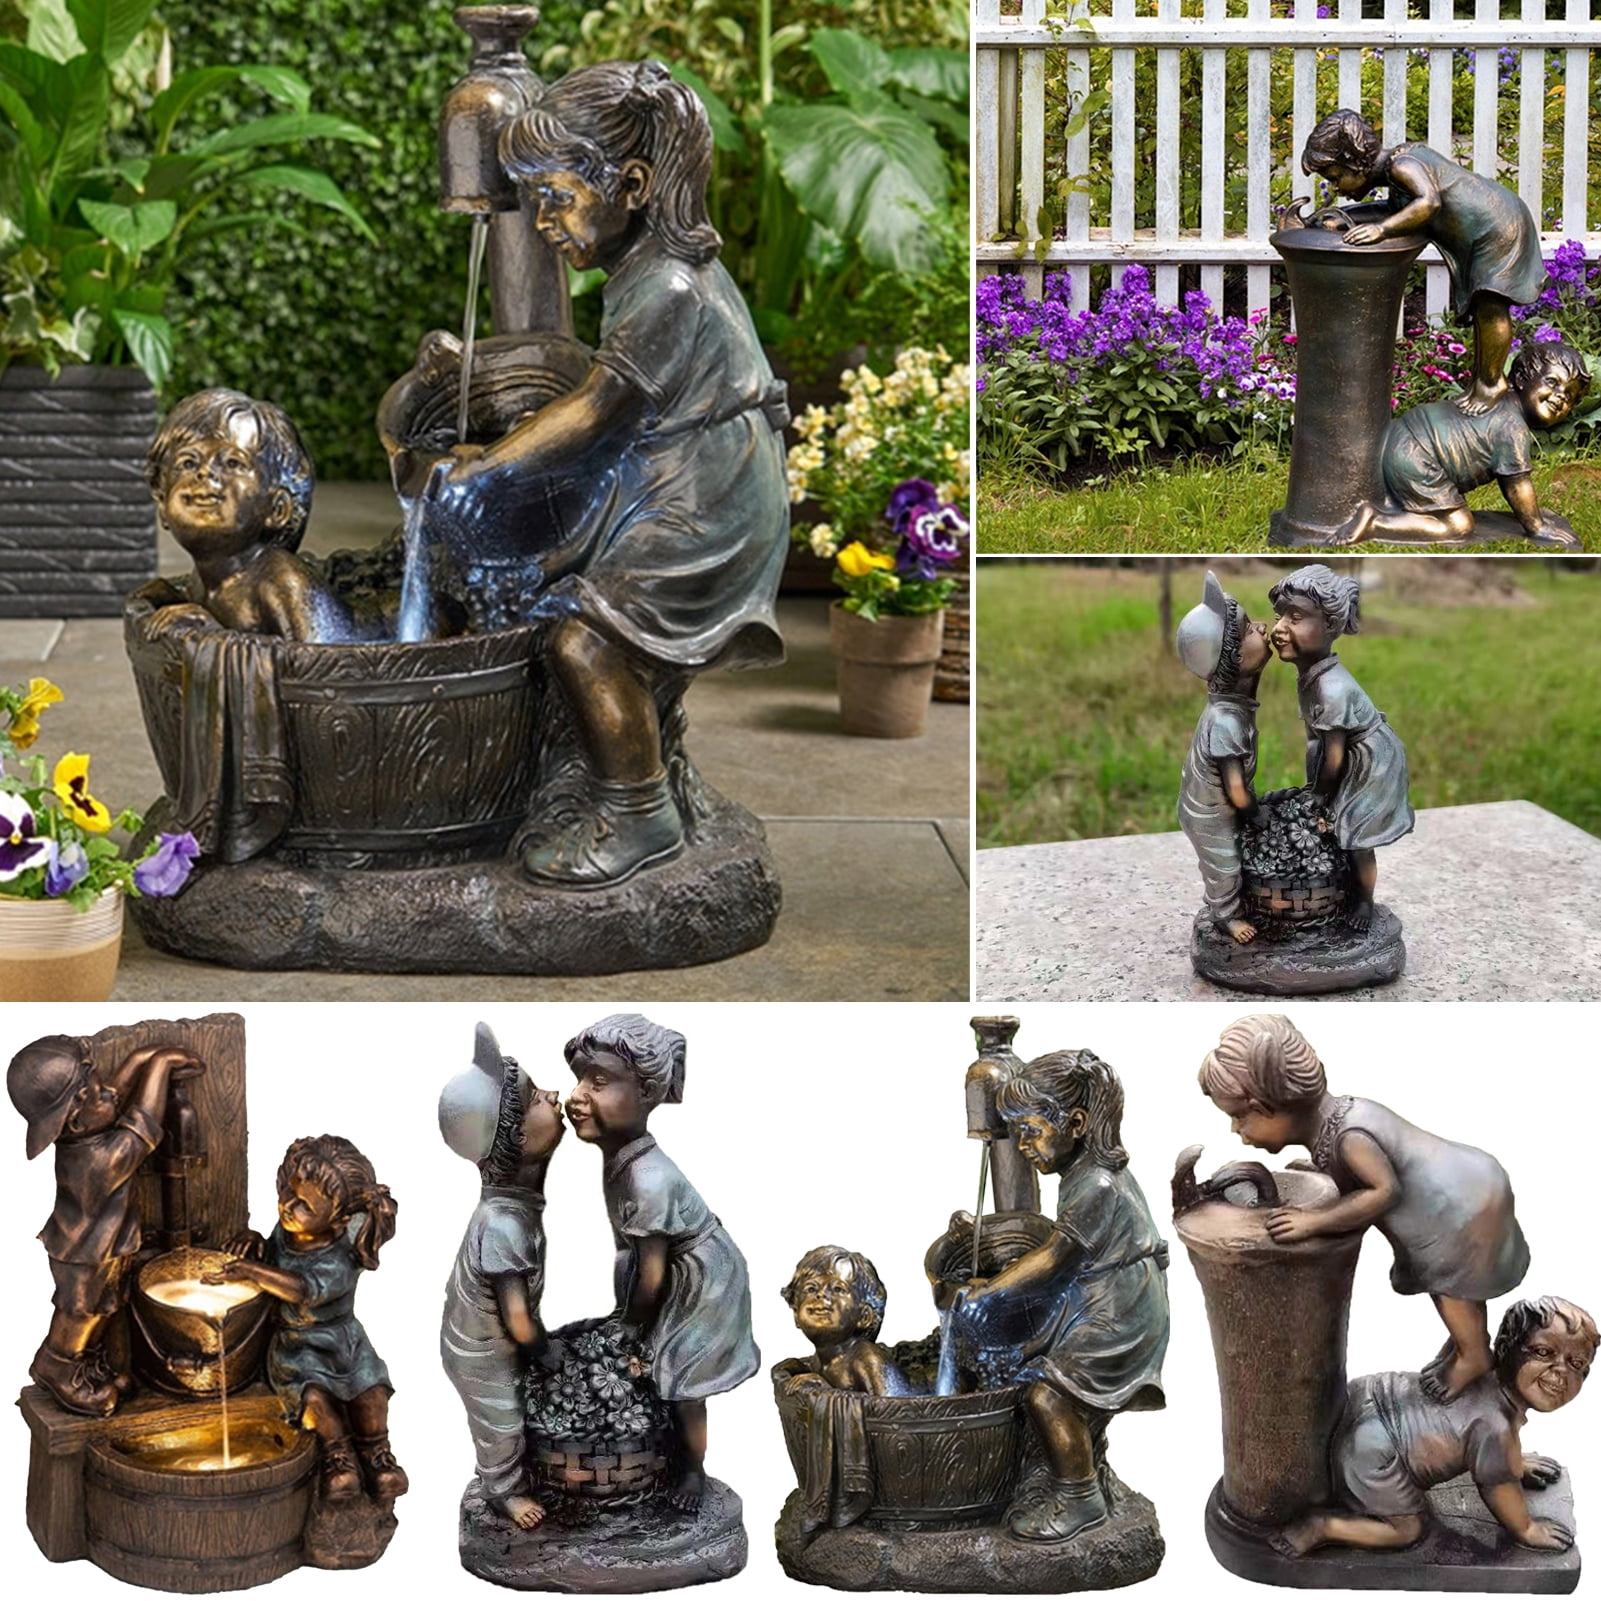 New Vintage Duck Garden Statue Sculpture Pair Of Love Ducks Decorative Ornament 